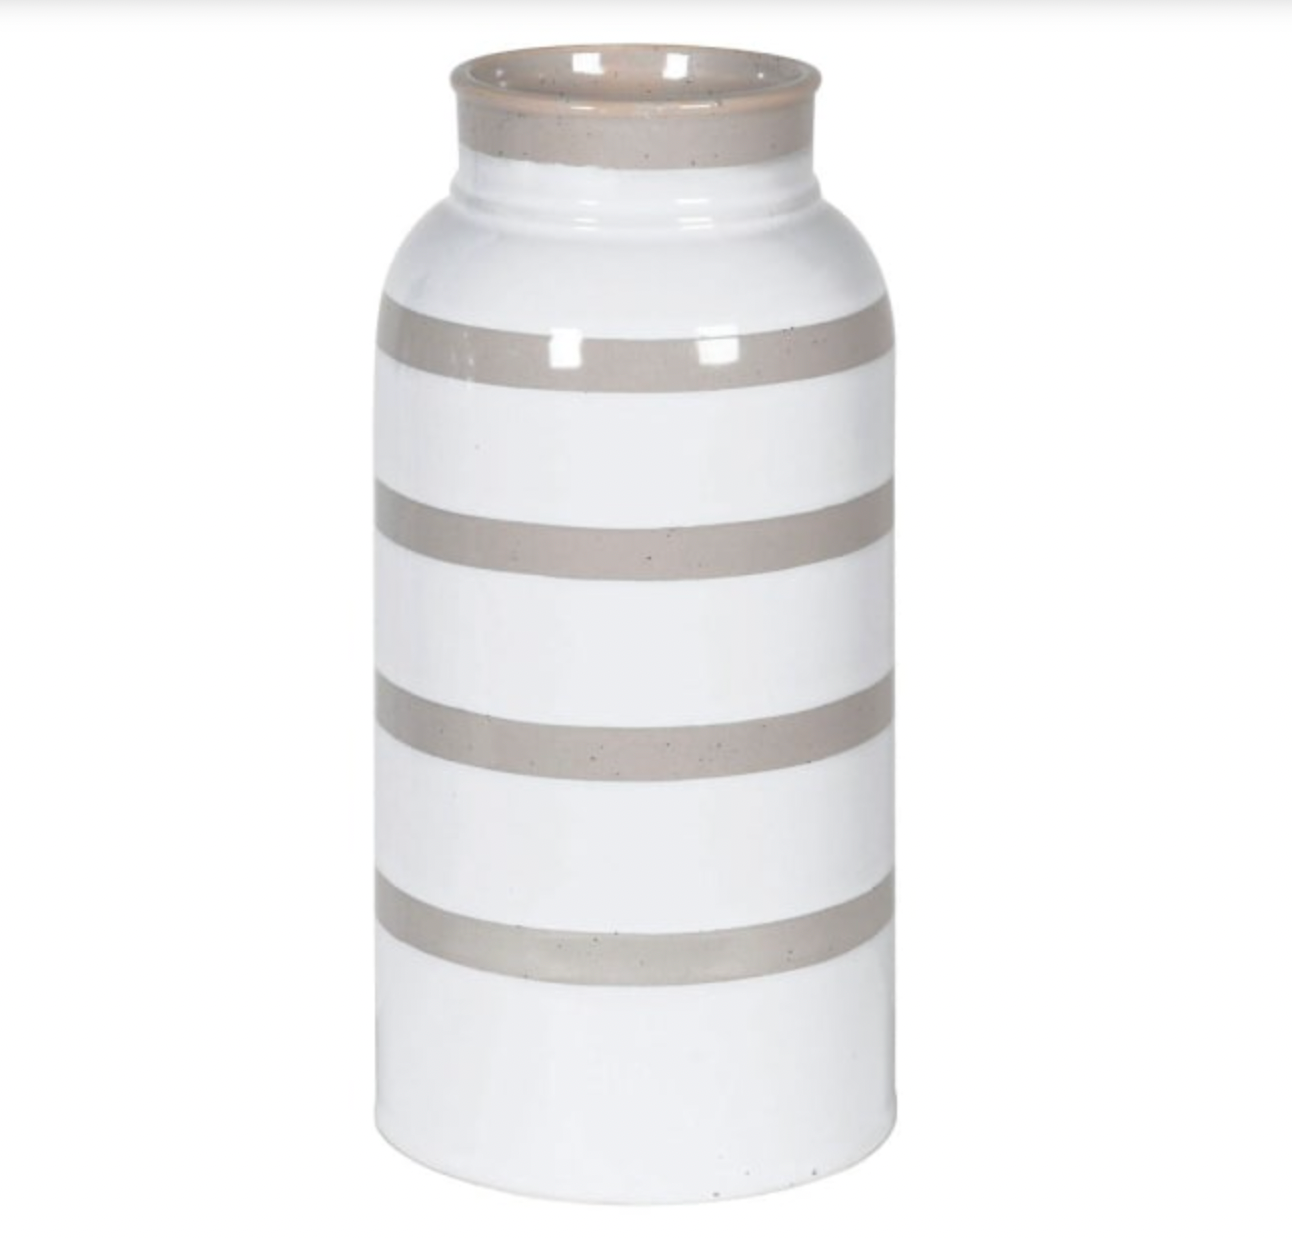 Ceramic Beige & White Striped Vase